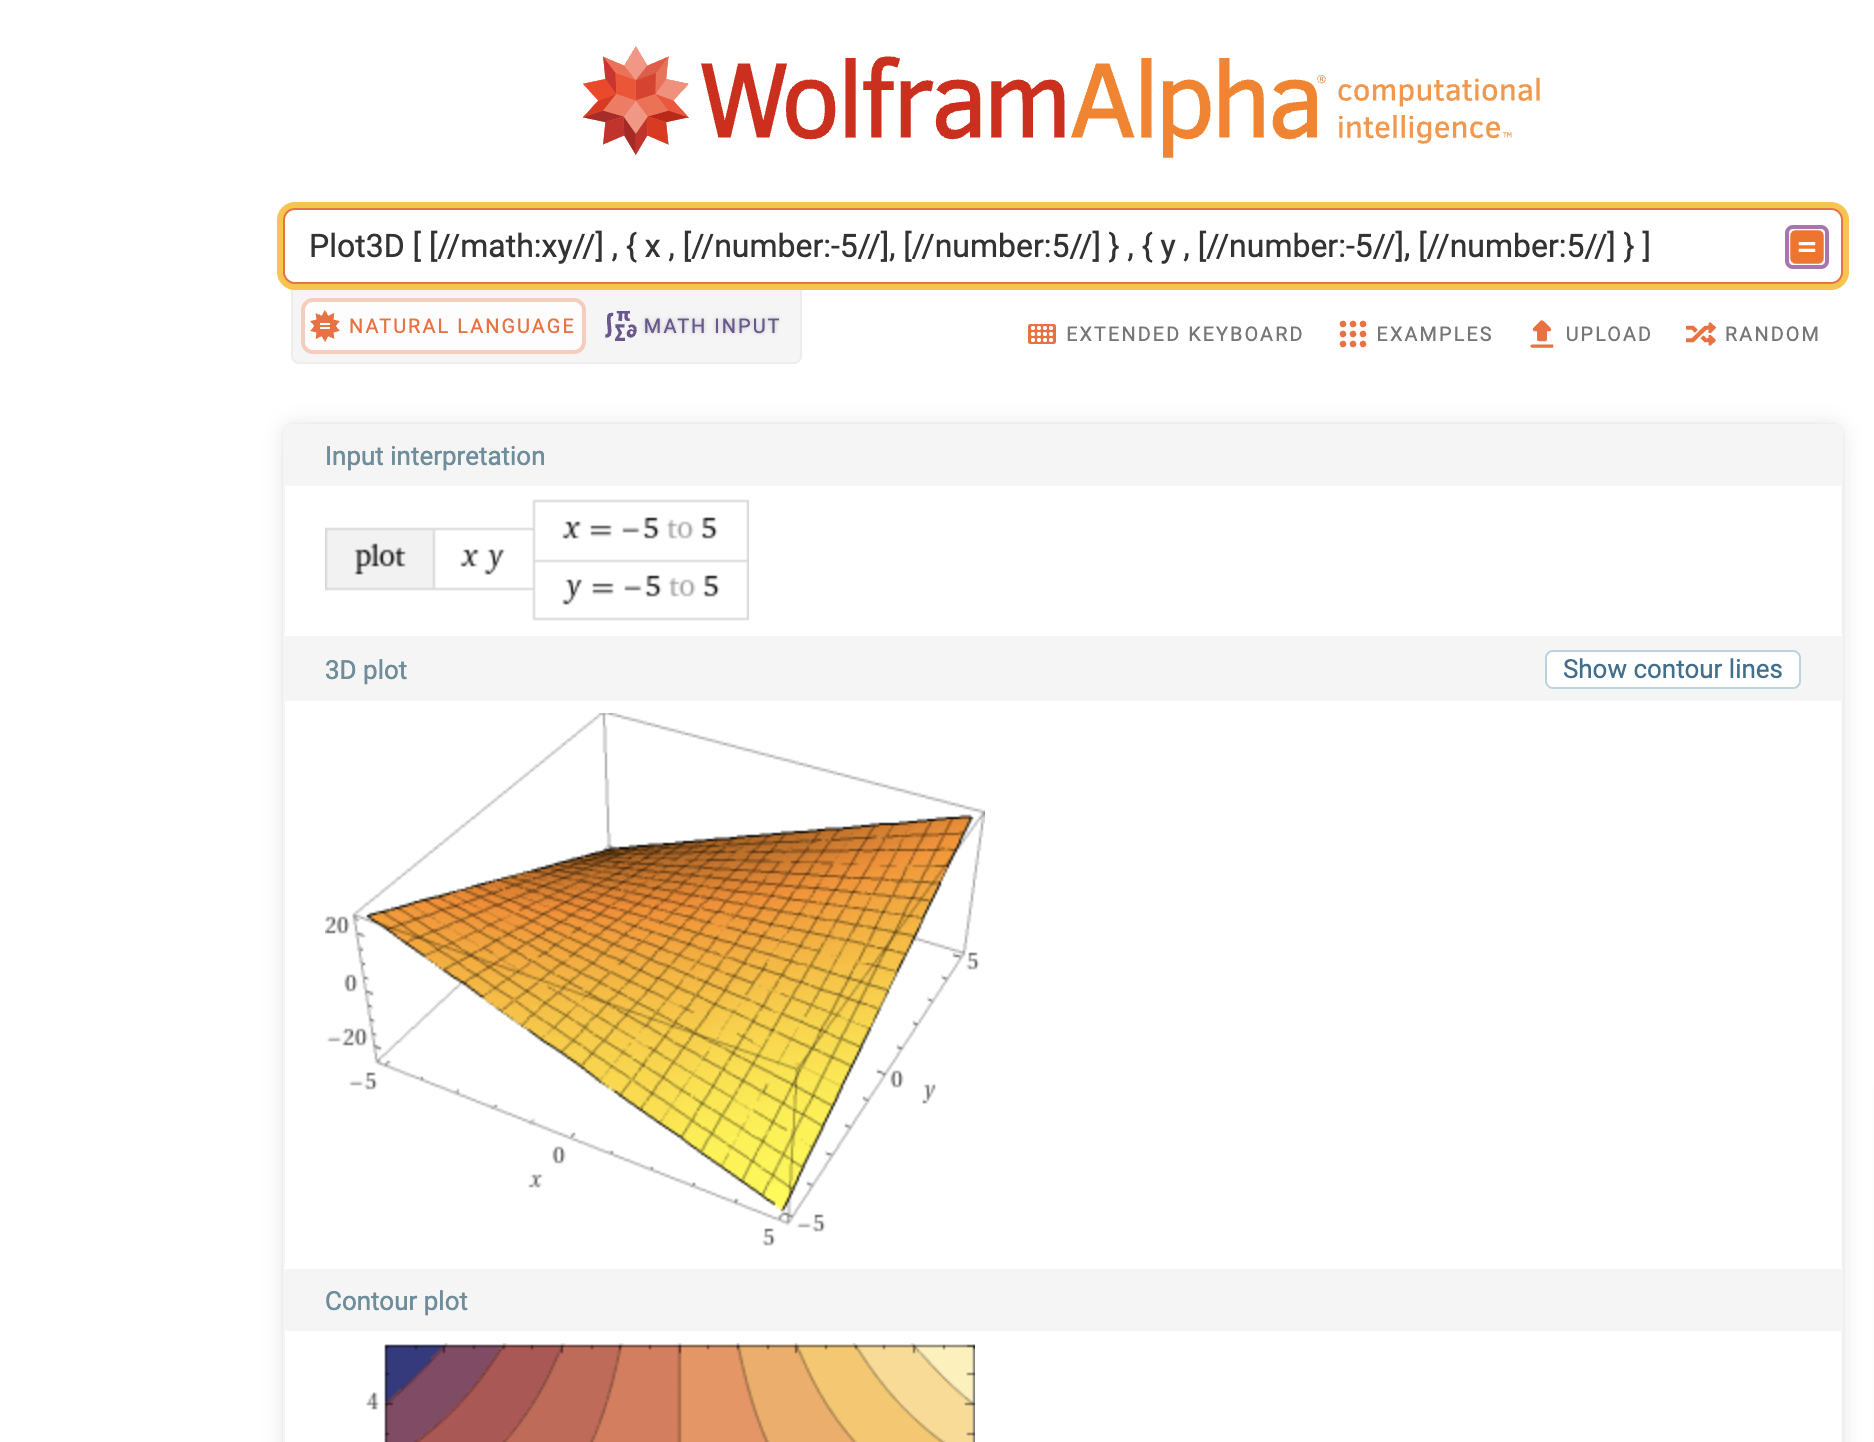 You Can Now Access Quantum Computing Via Wolfram Mathematica.